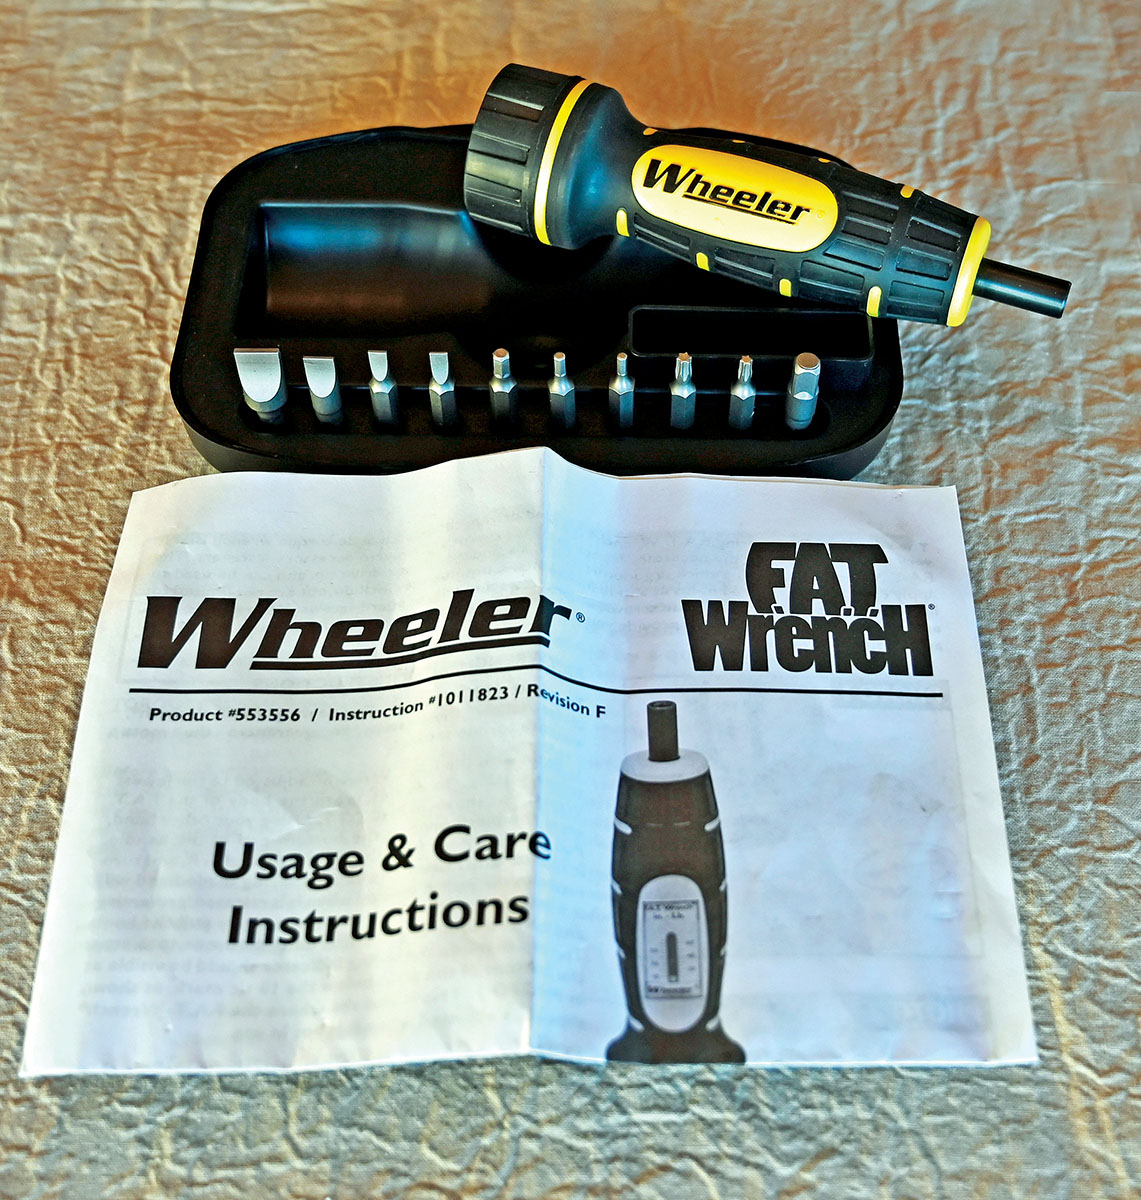 A Wheeler F.A.T. Torque Wrench.